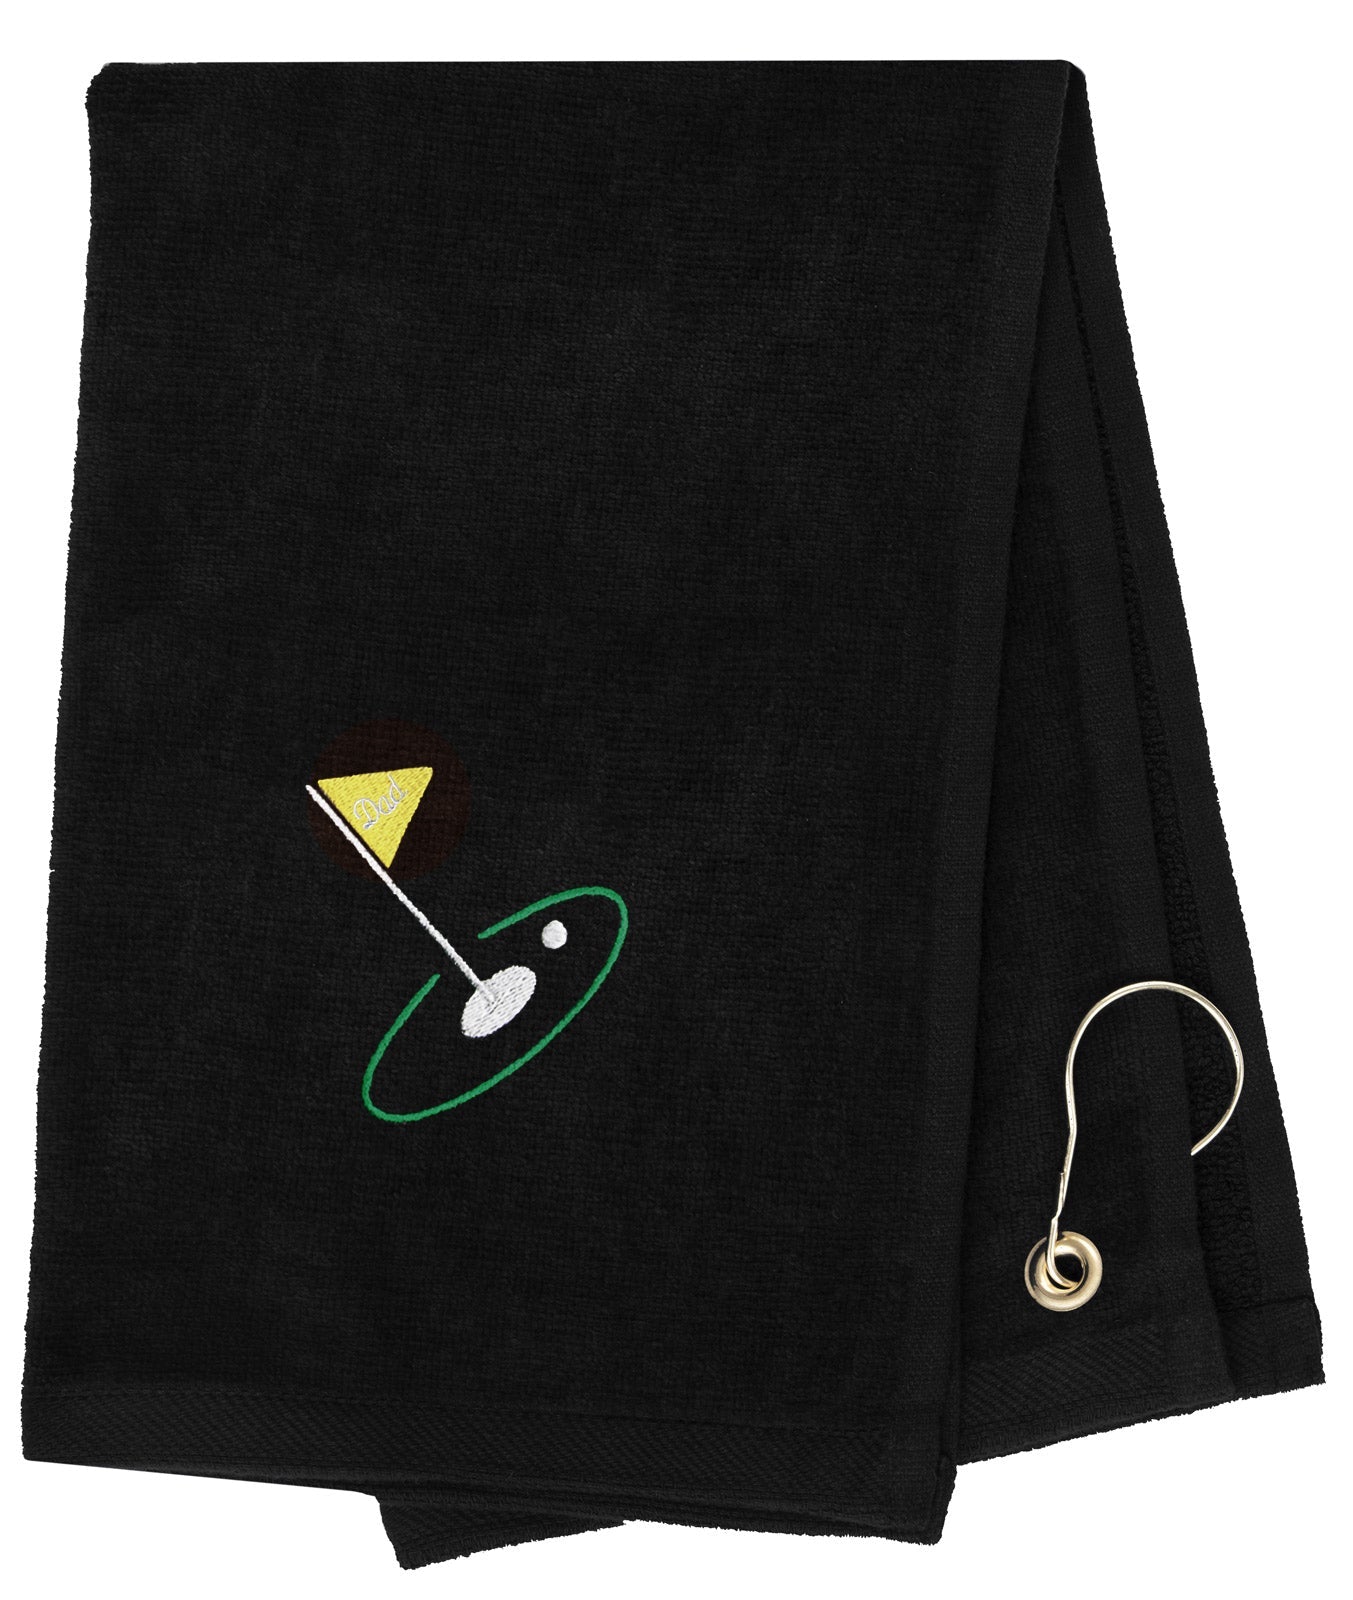 Mato & Hash Golf Towels Embroidery - Mato & Hash